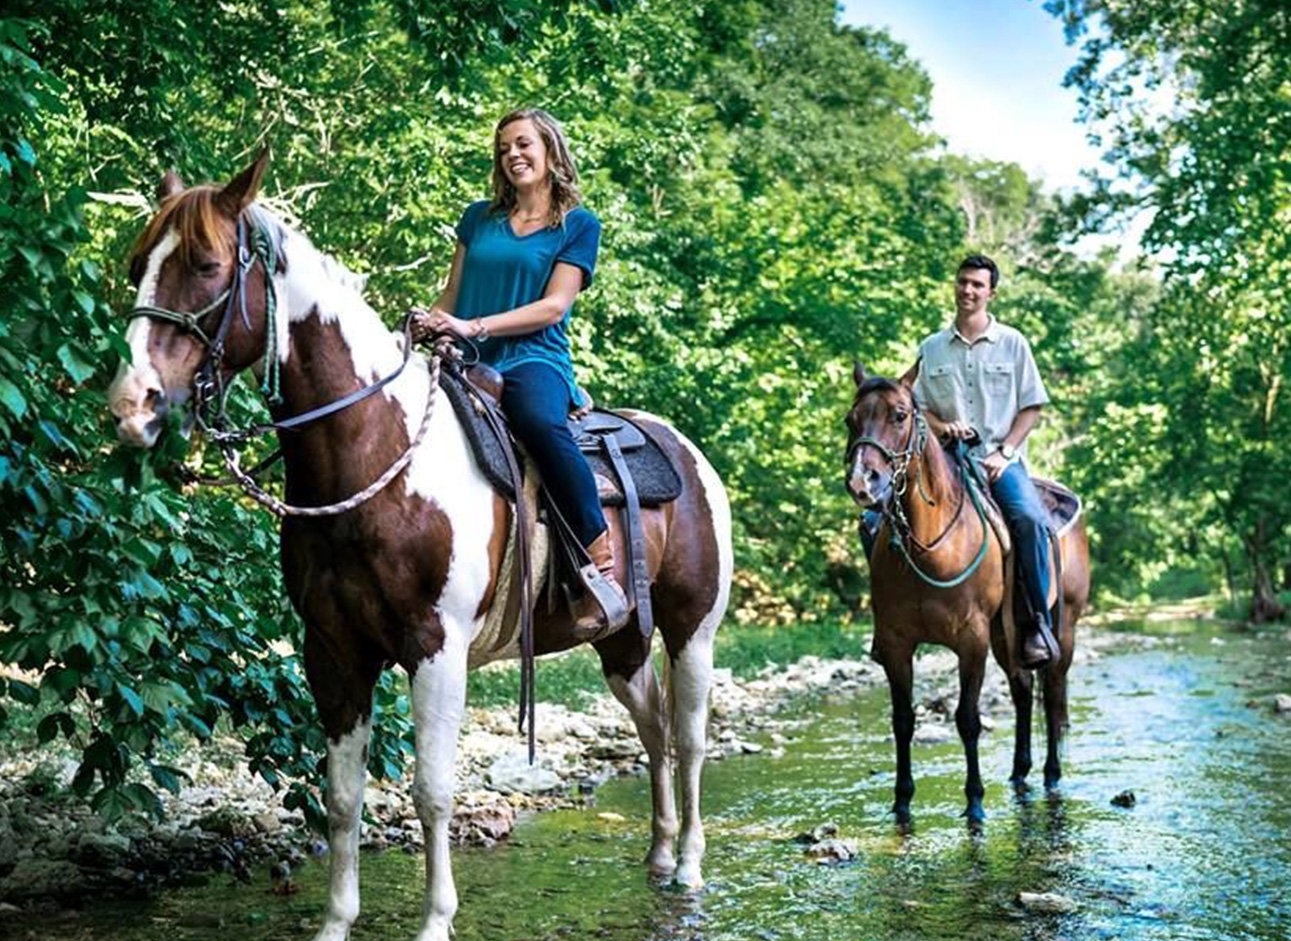 Horse Ride - Enjoy horseback riding adventures in scenic locations